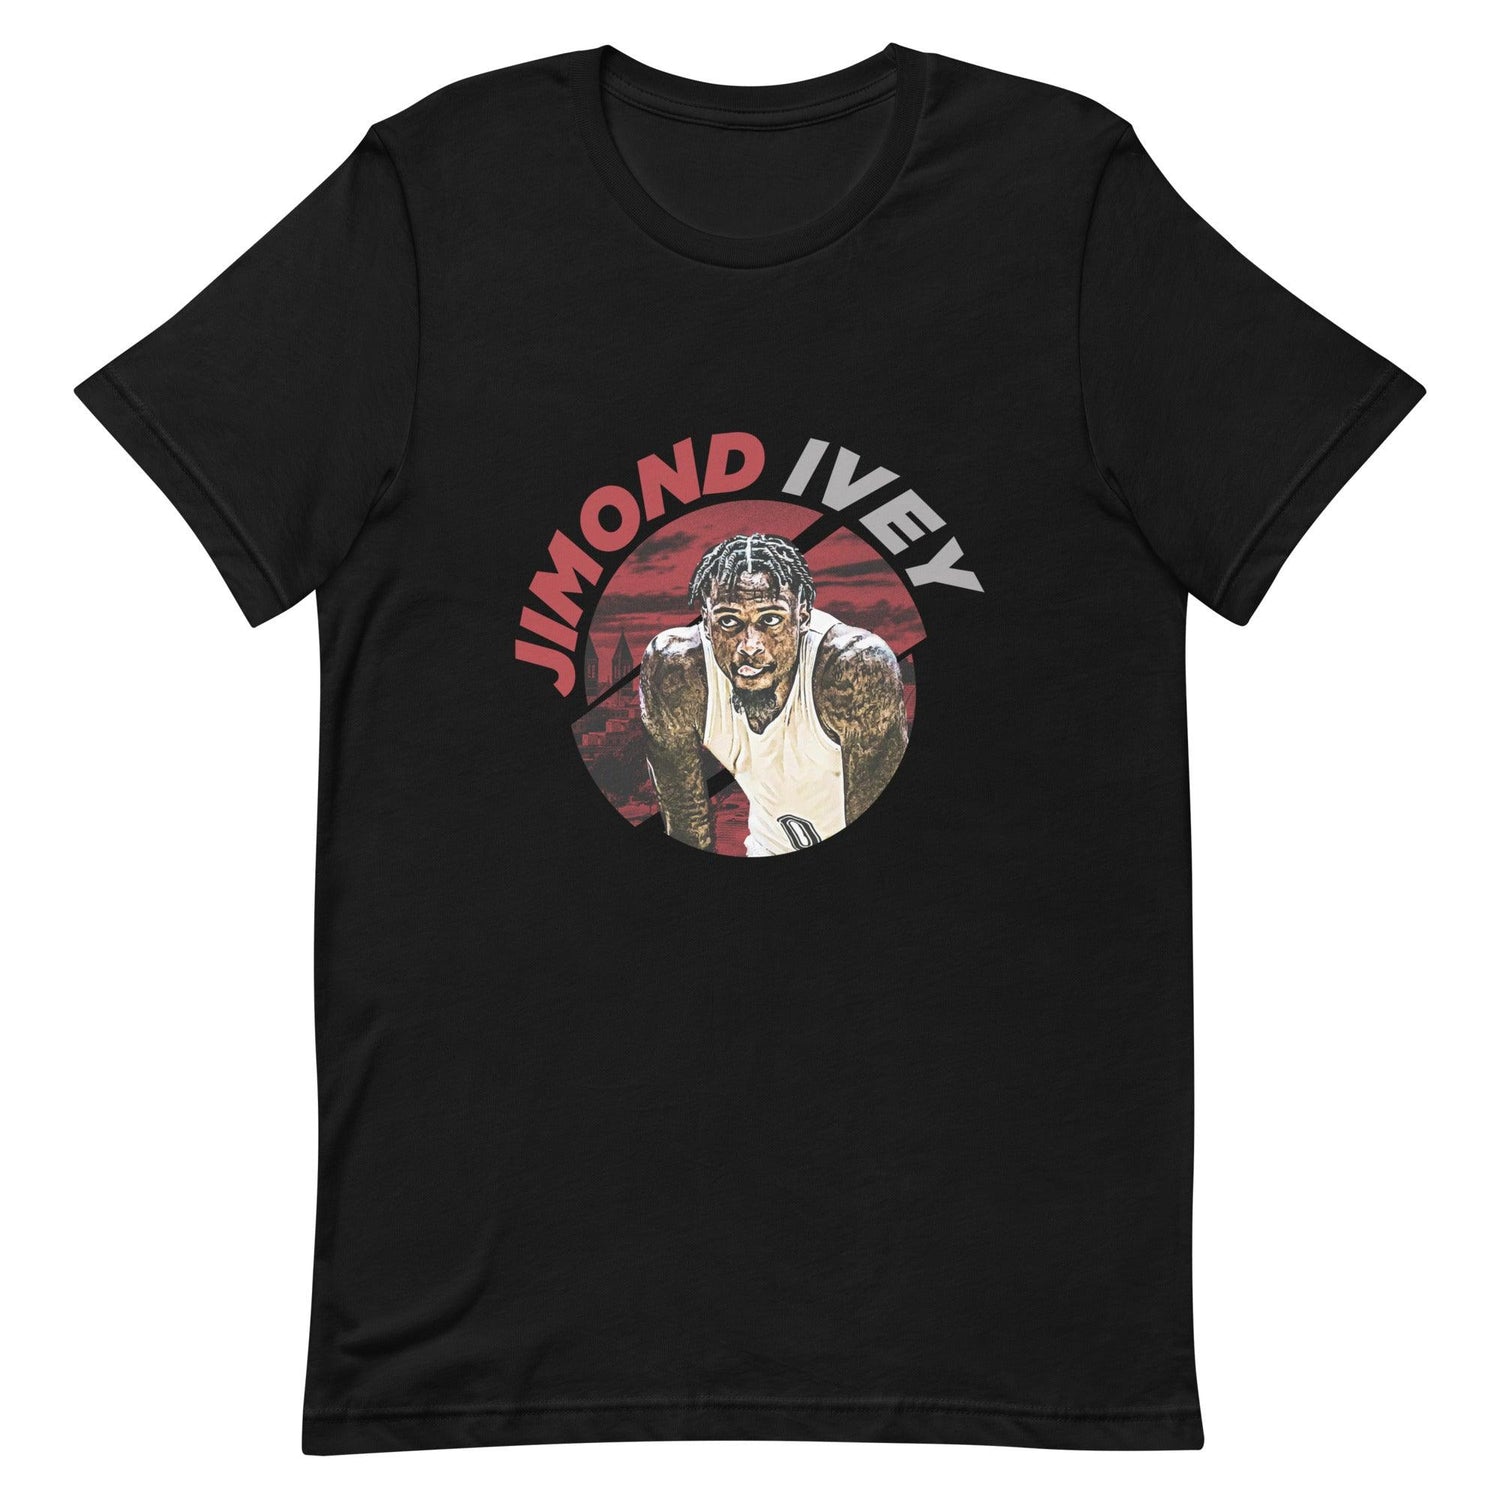 Jimond Ivey "Baller" t-shirt - Fan Arch